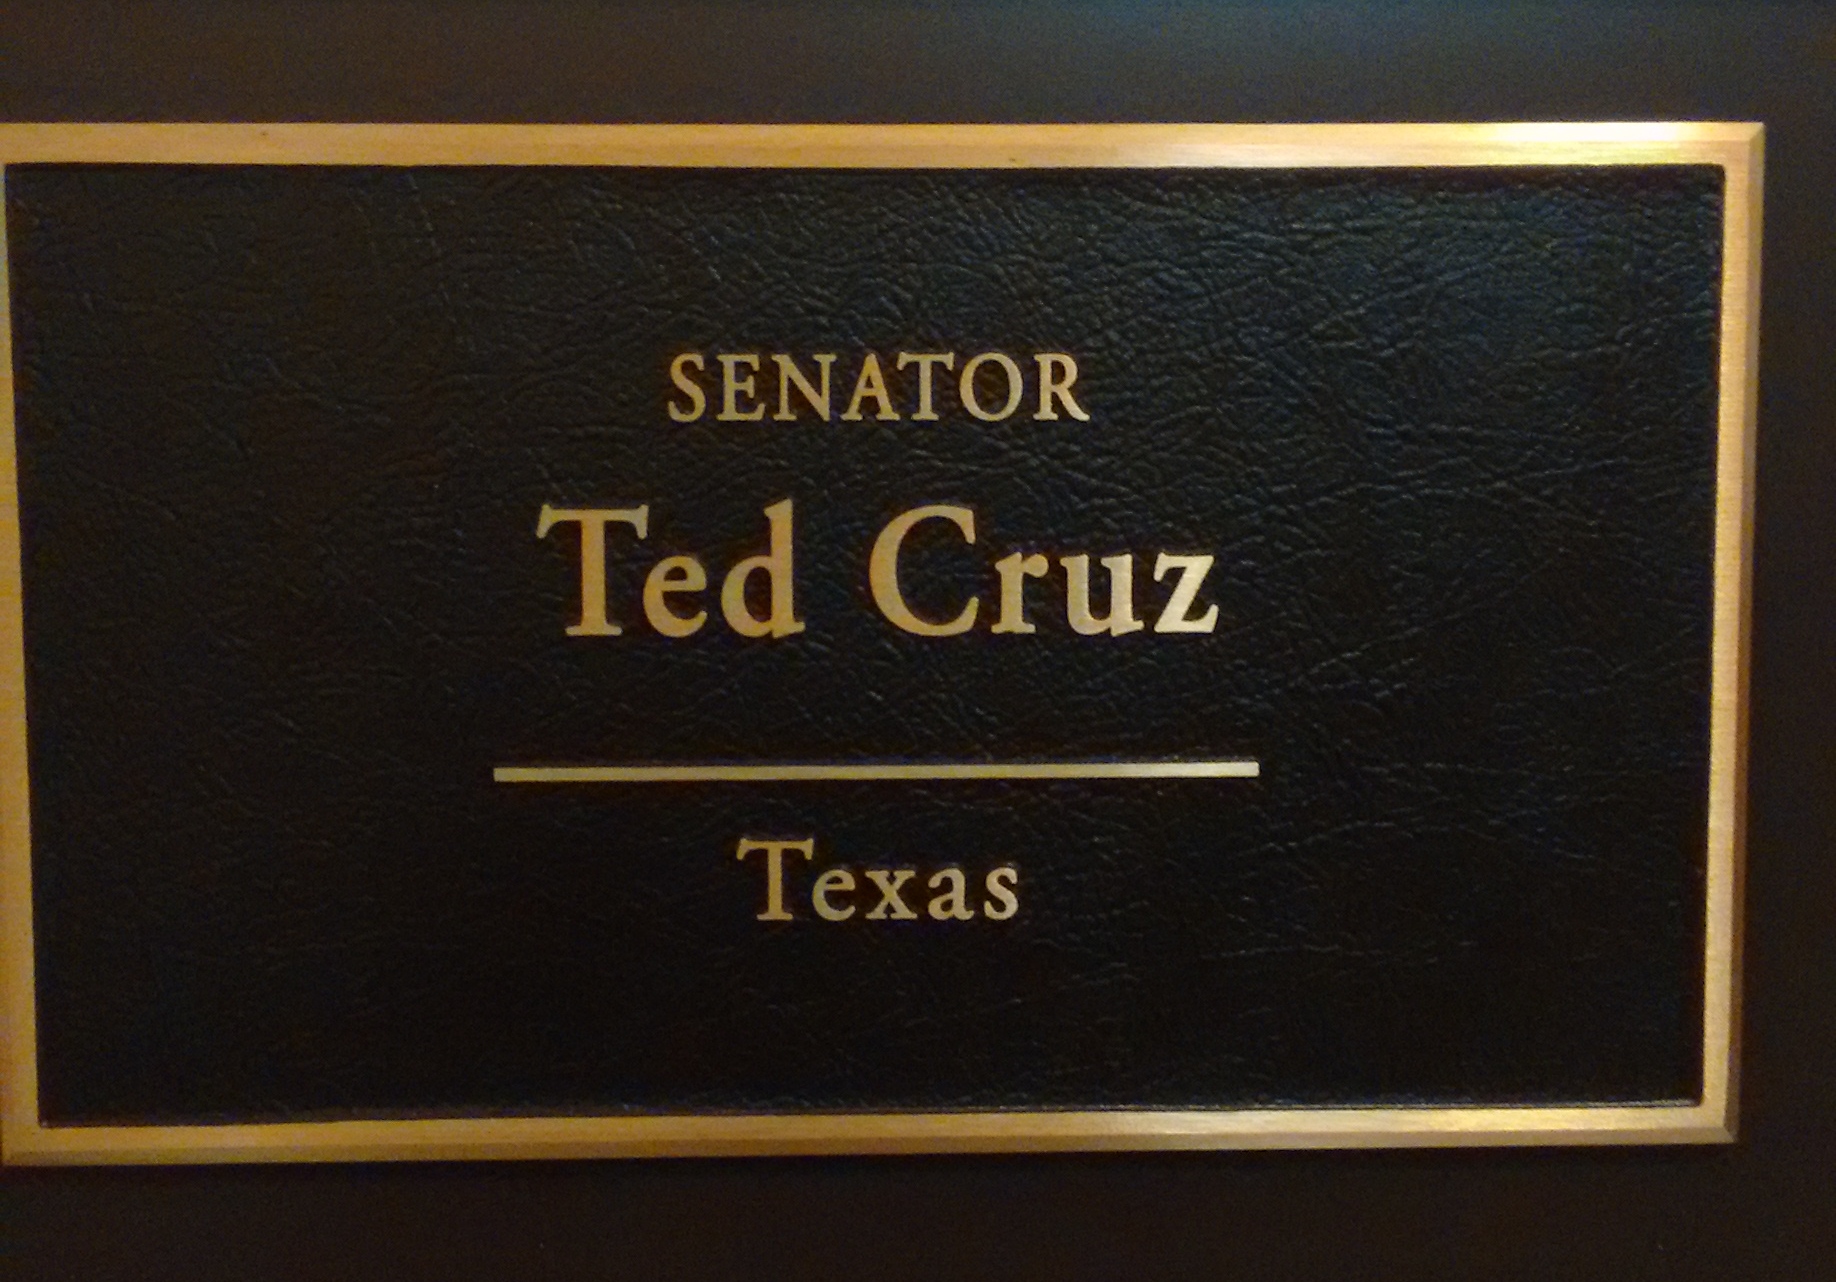 Outside the office of Senator Ted Cruz